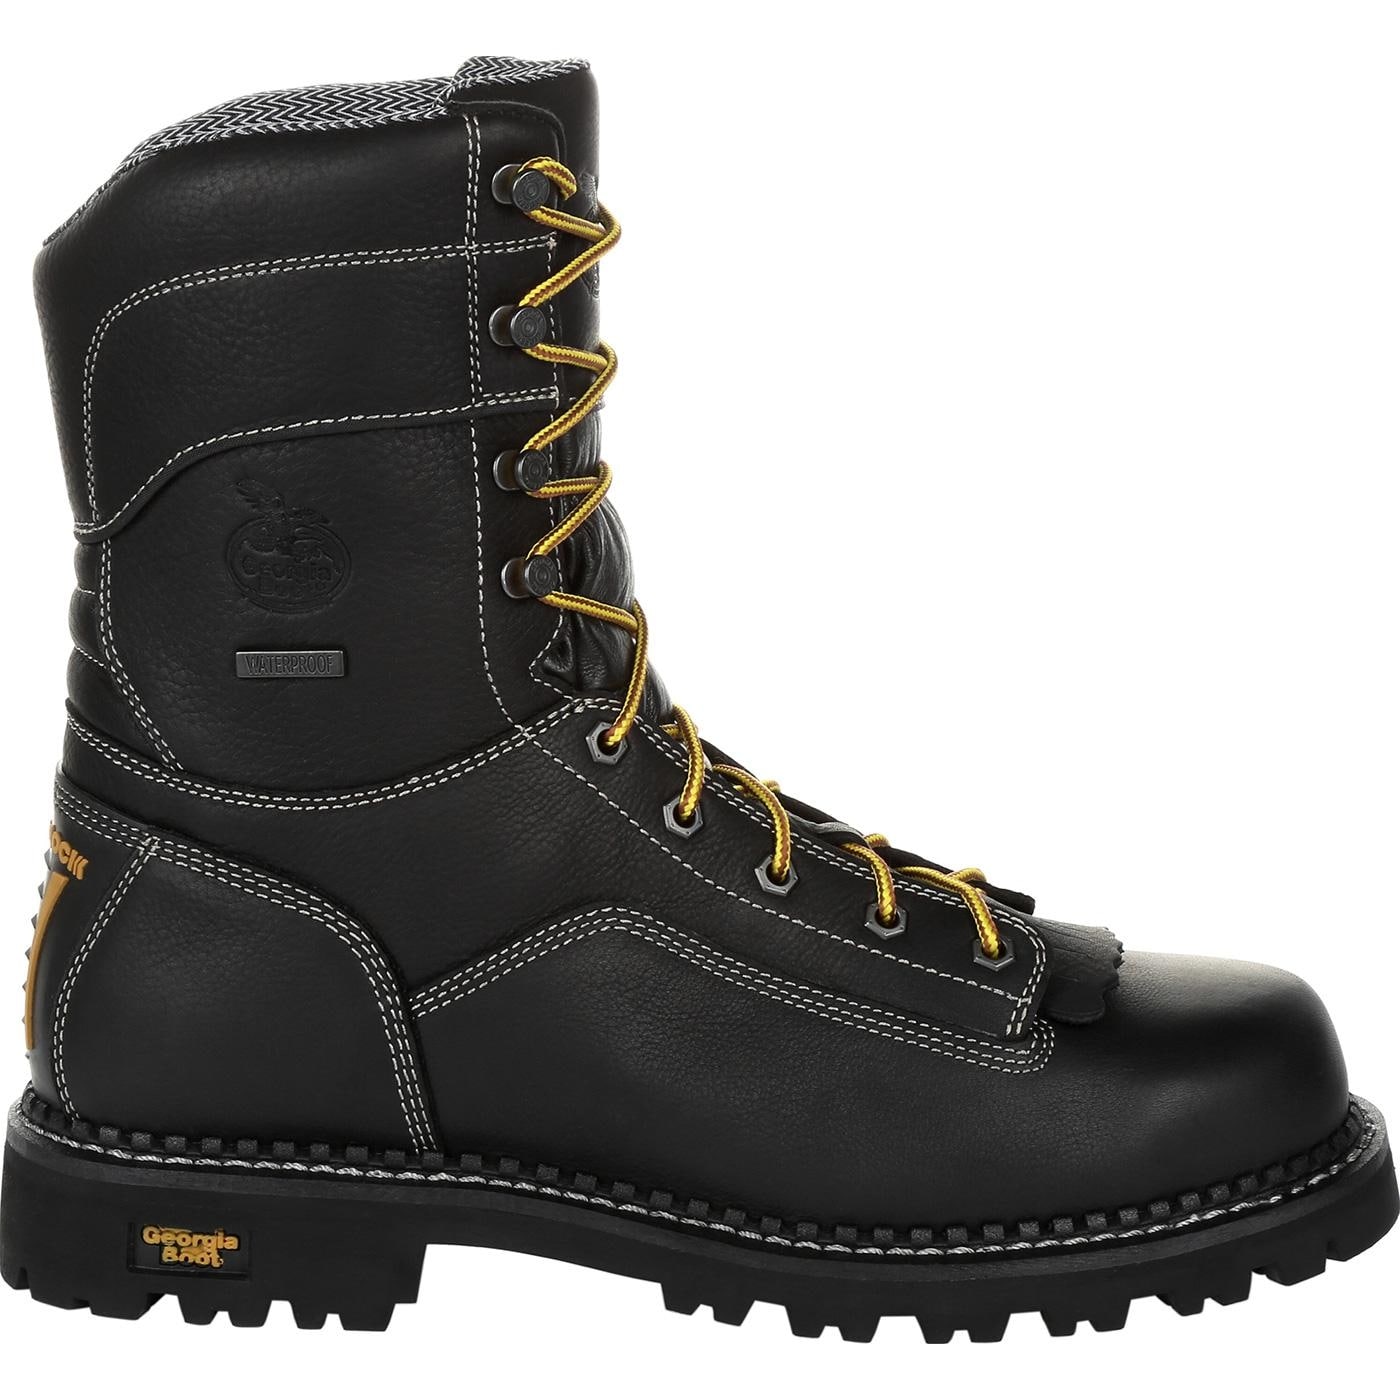 waterproof low boots